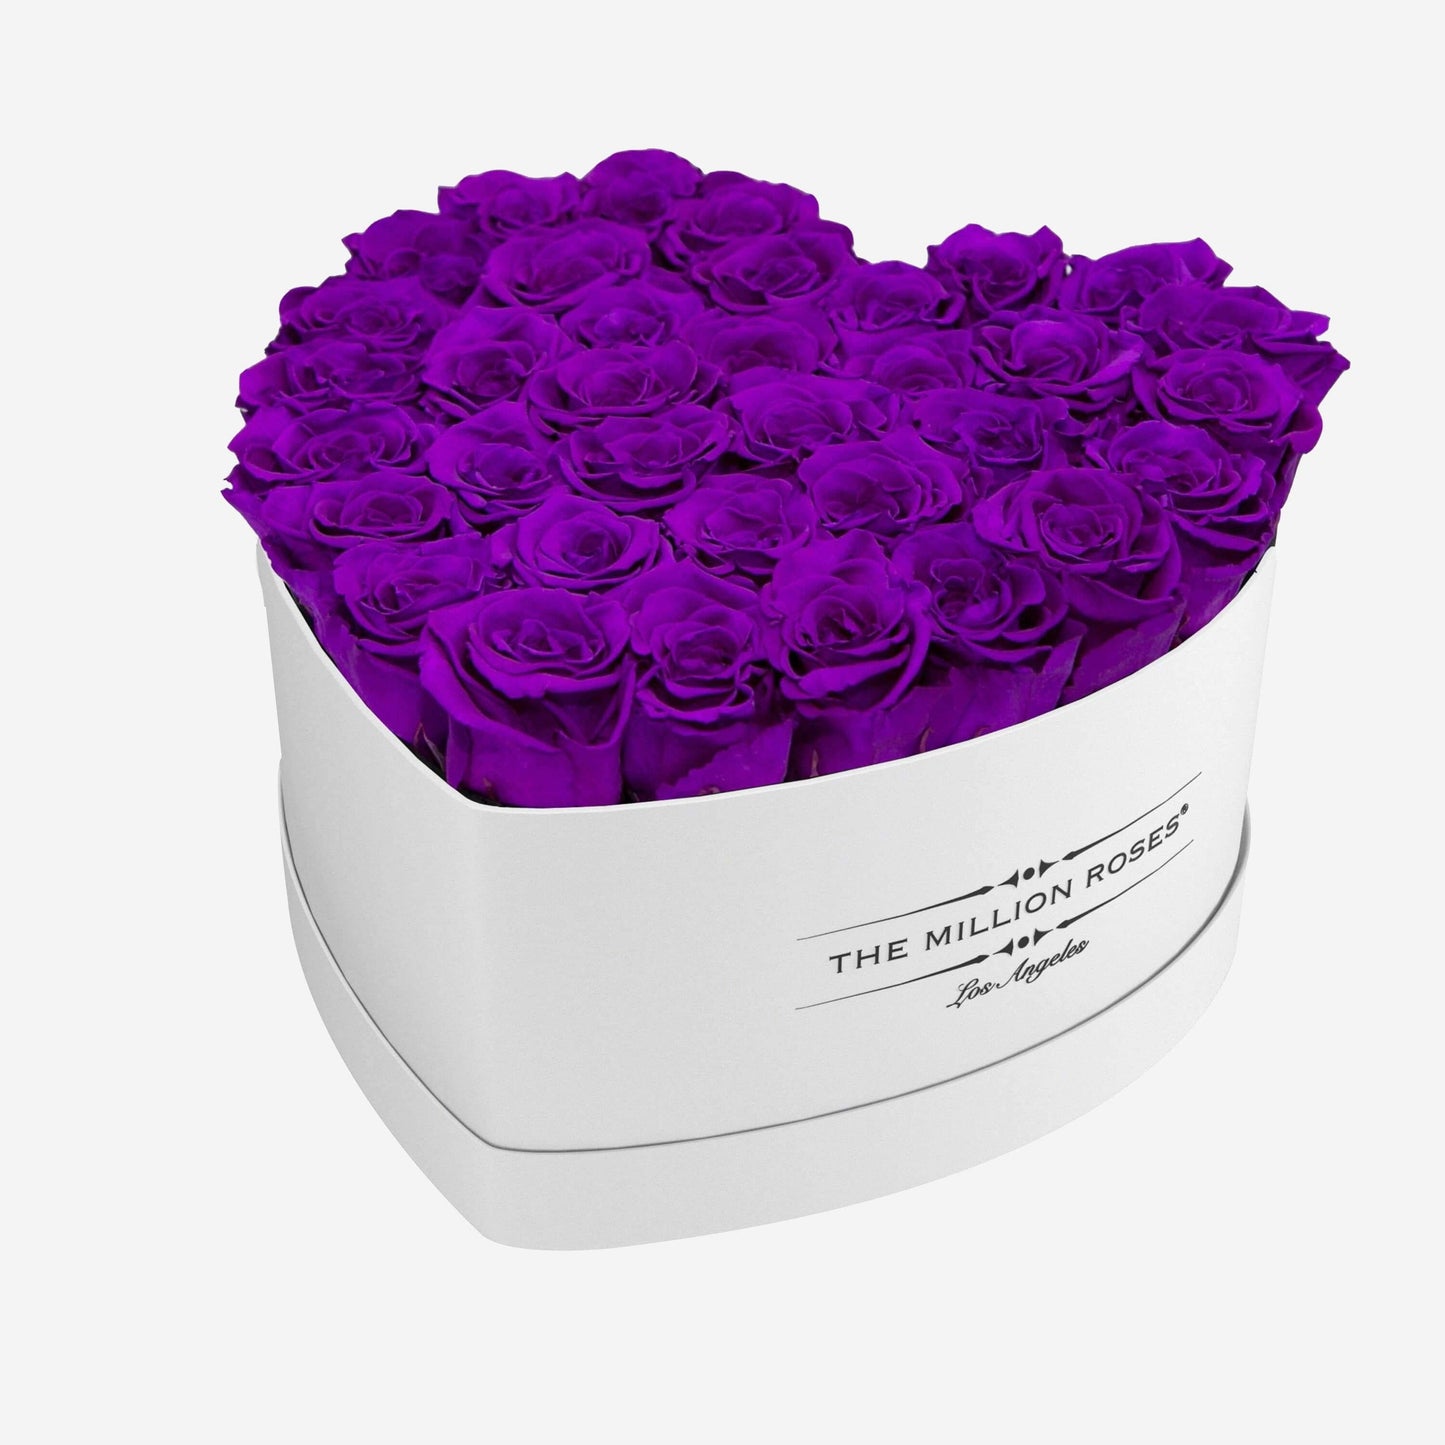 Heart White Box | Bright Purple Roses - The Million Roses